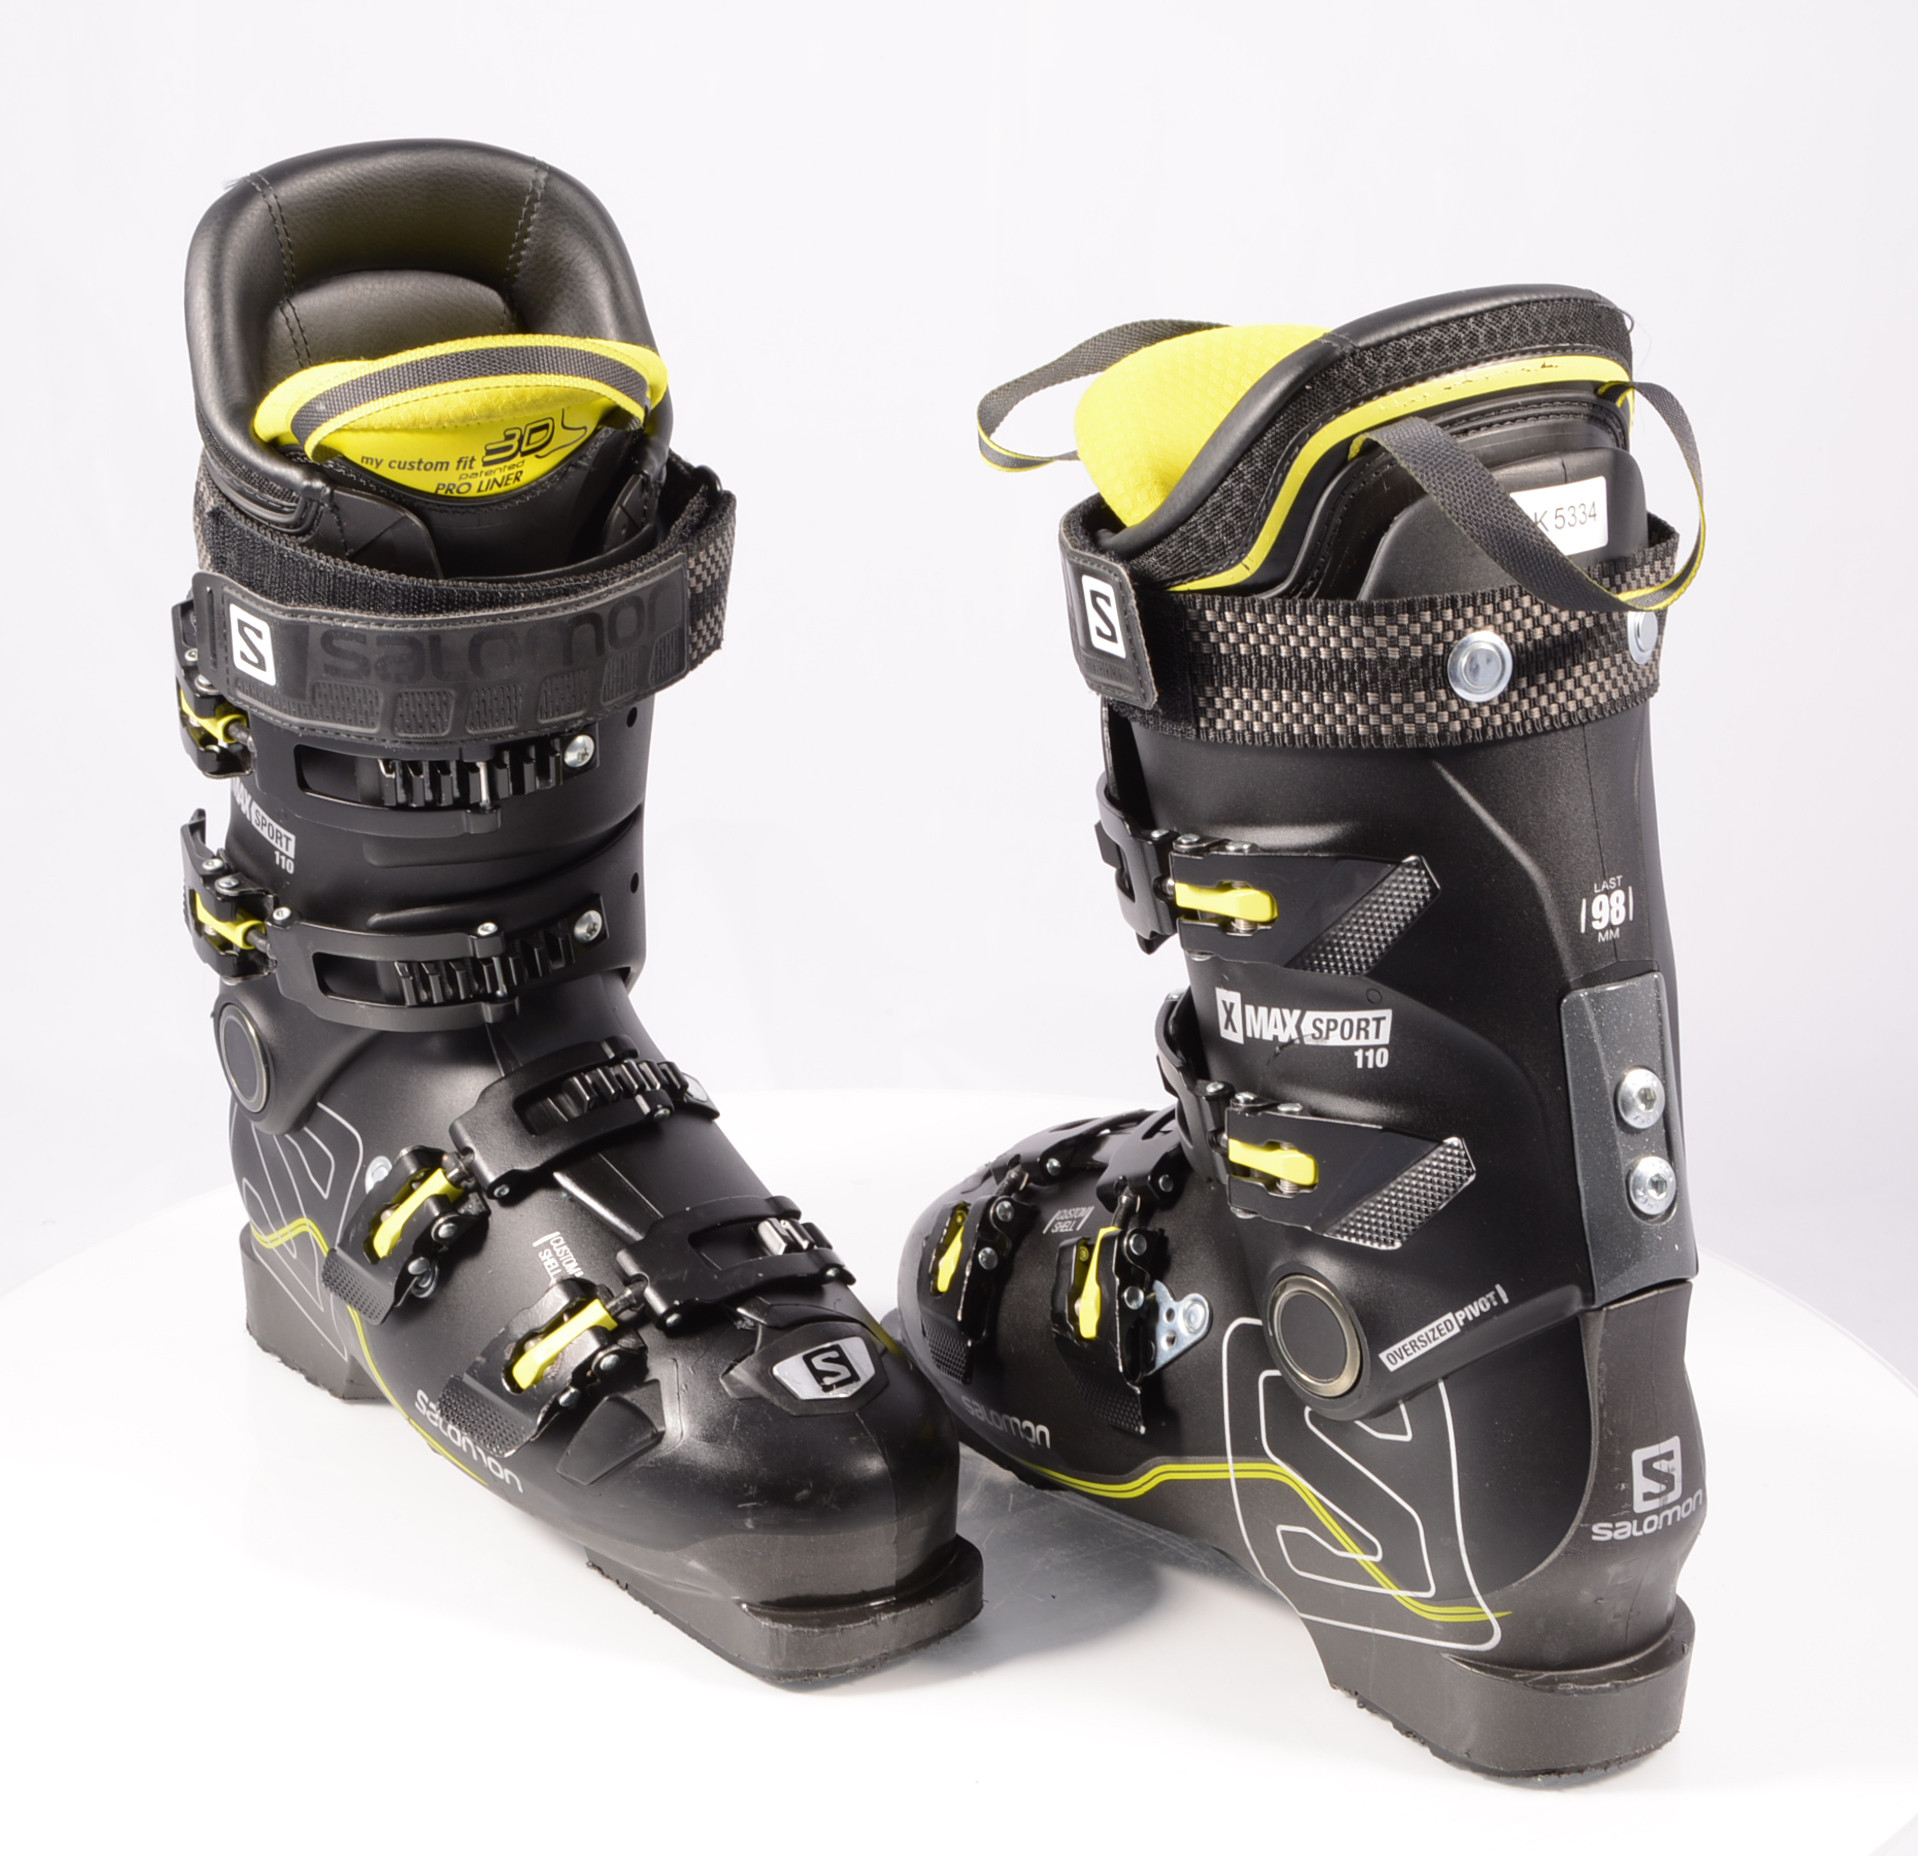 Frons Gelijkenis Perforeren ski boots SALOMON X MAX 110 SPORT 2019, My custom fit 3D, Pro liner, Custom  shell, Oversized pivot - Mardosport.com